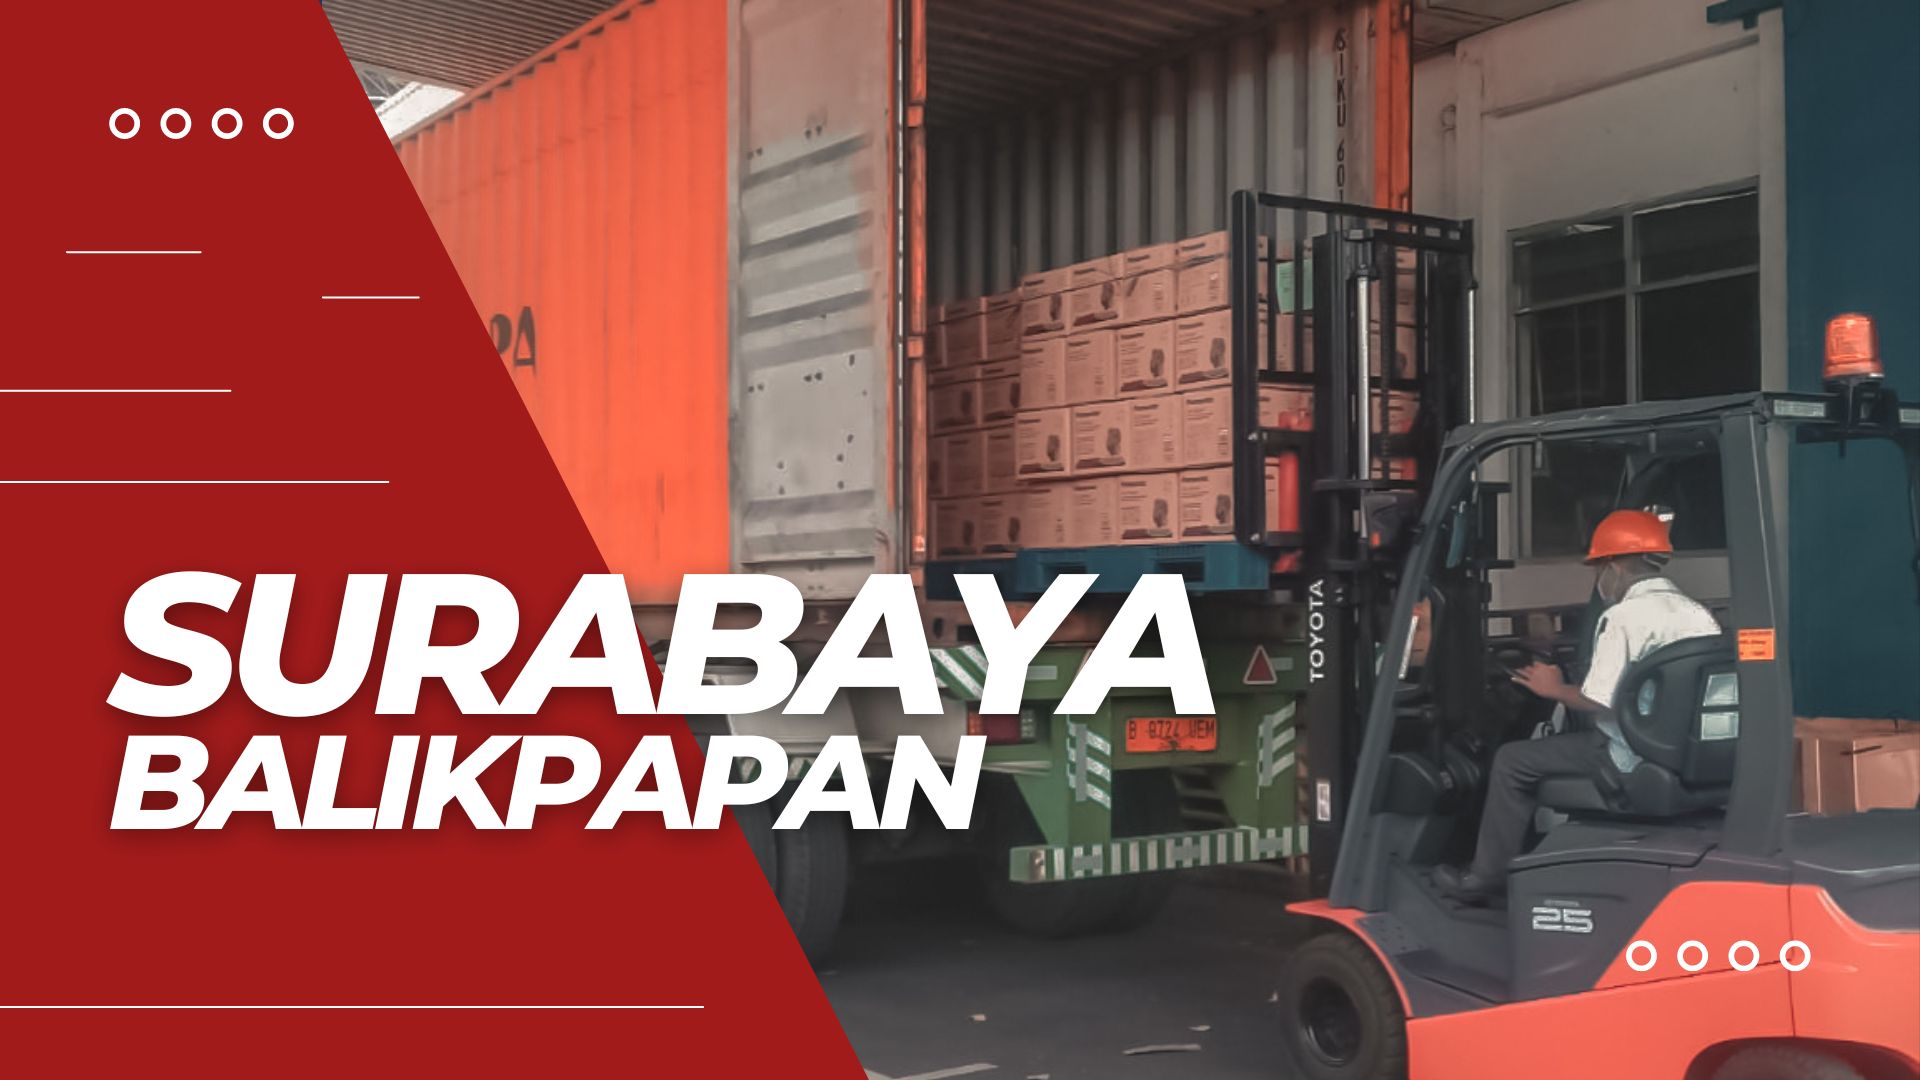 Ekspedisi Via Container Surabaya Balikpapan